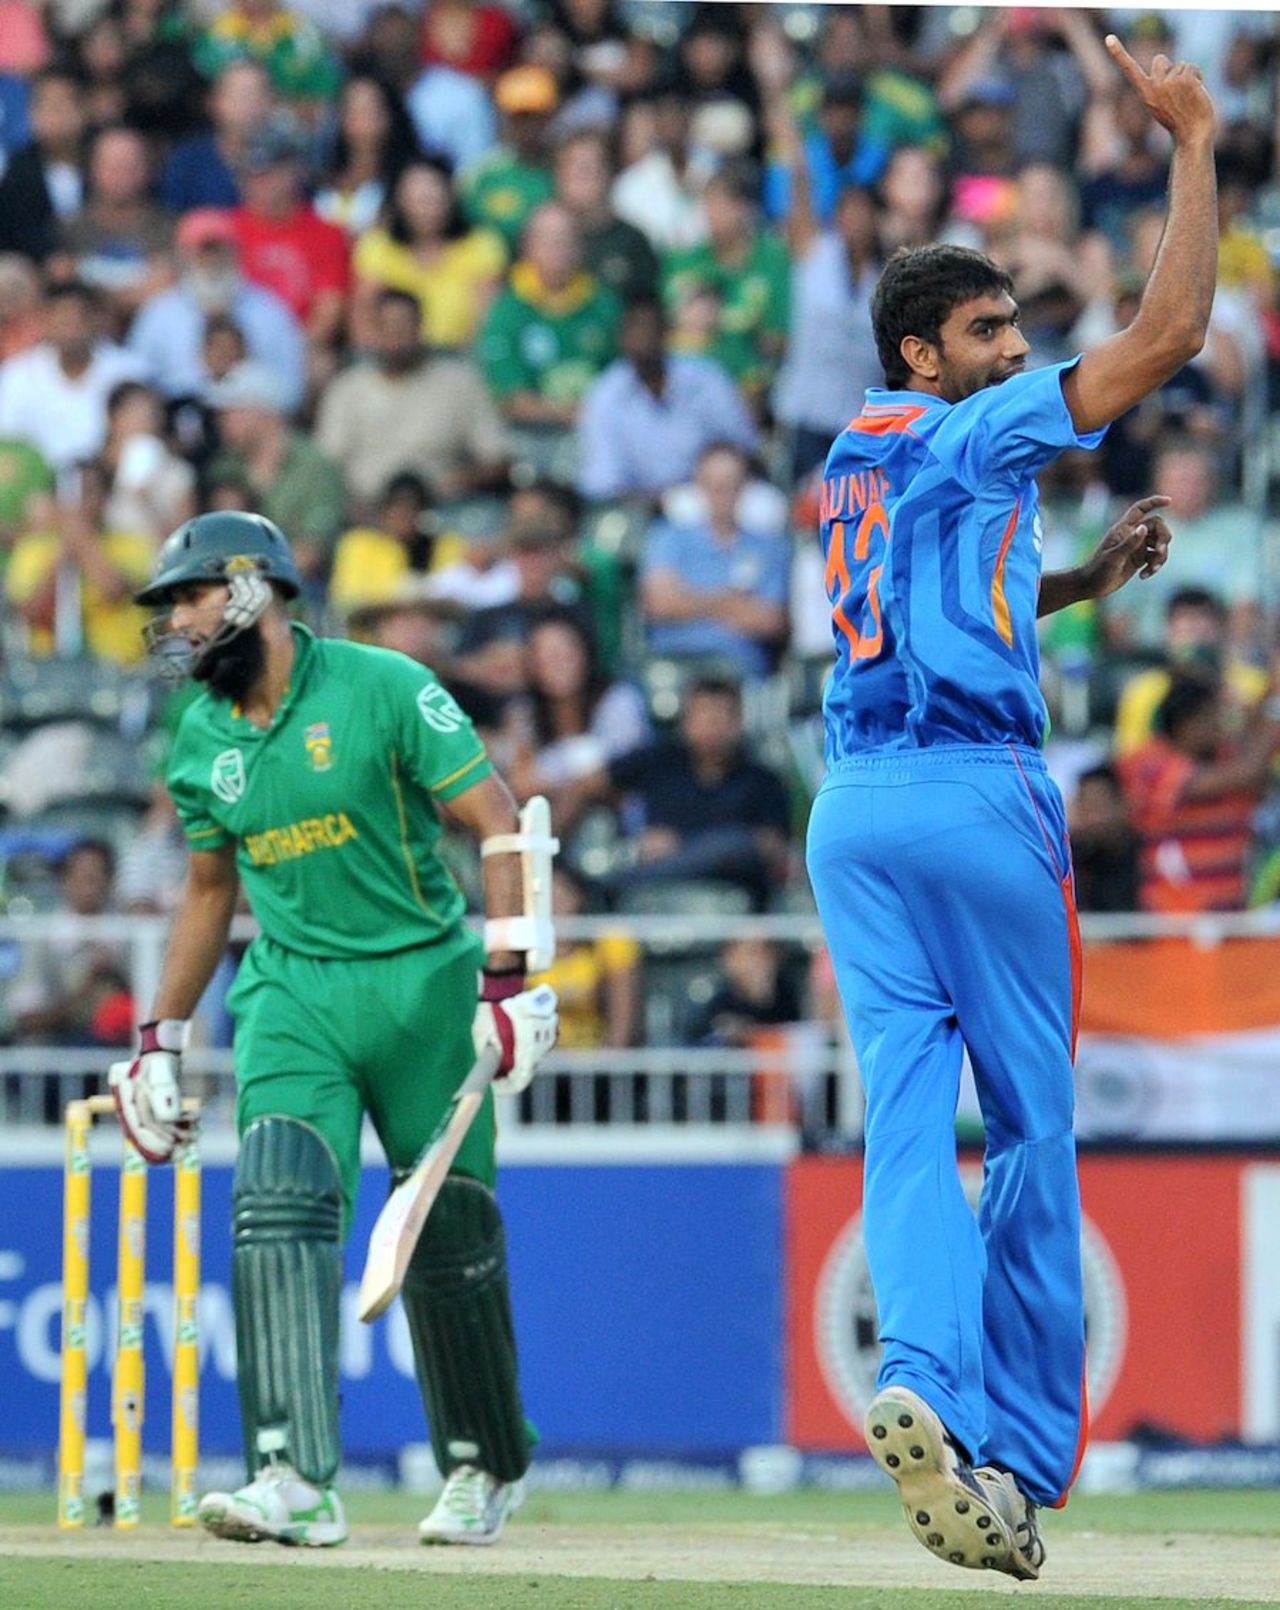 Munaf Patel dismissed Hashim Amla cheaply, South Africa v India, 2nd ODI, Johannesburg, January 15, 2011